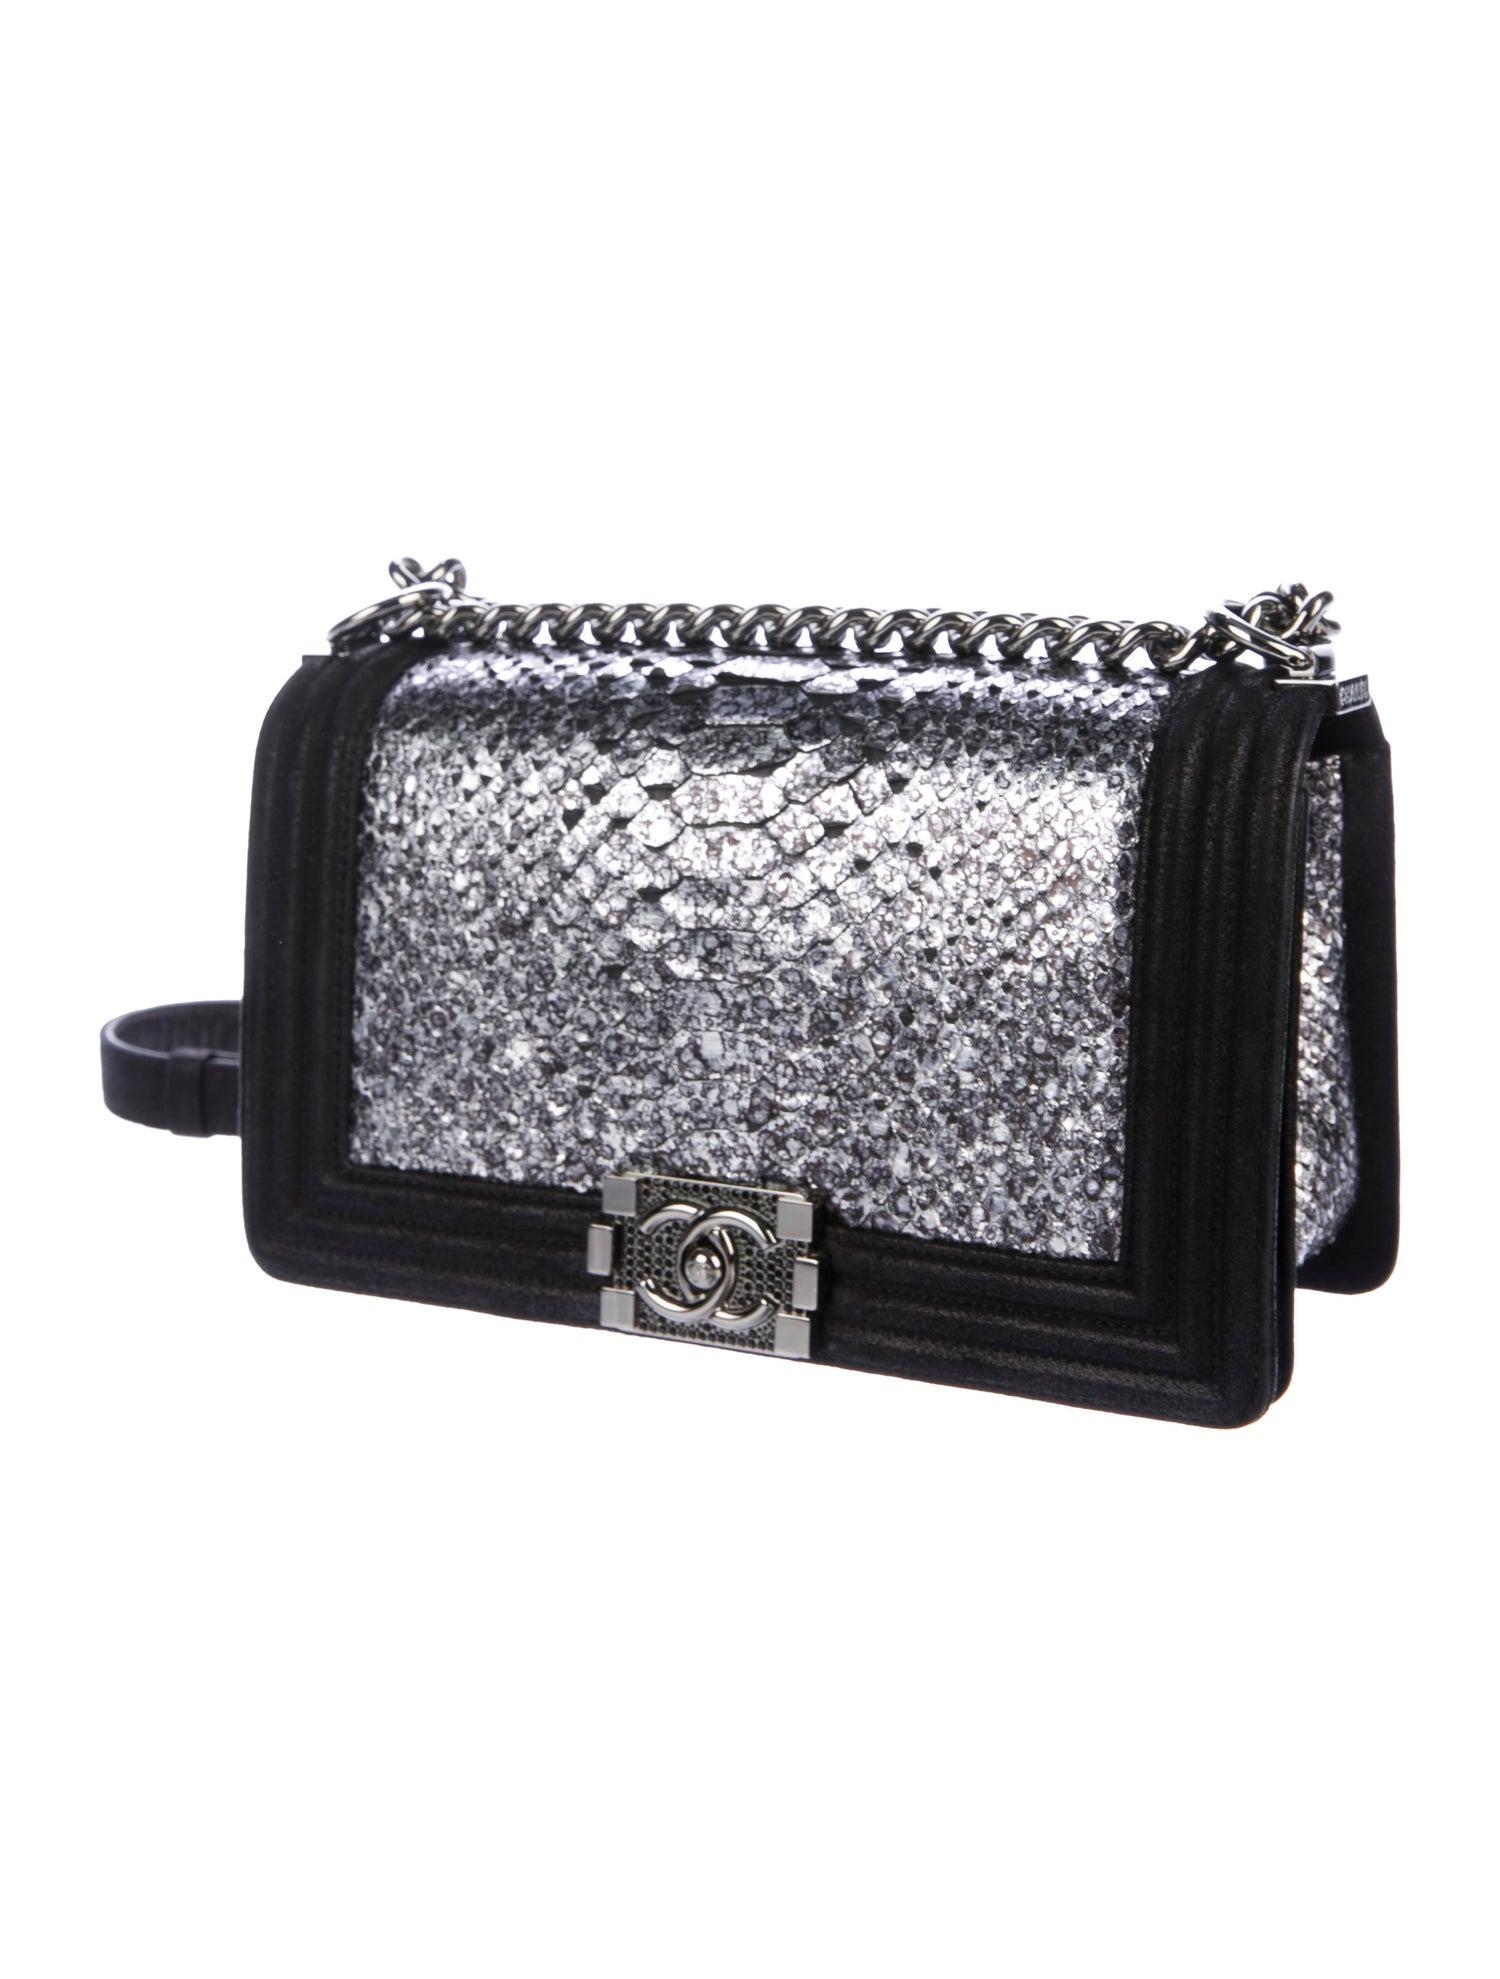 Women's Chanel Black Leather Silver Snakeskin Exotic Boy Small Shoulder Flap Bag